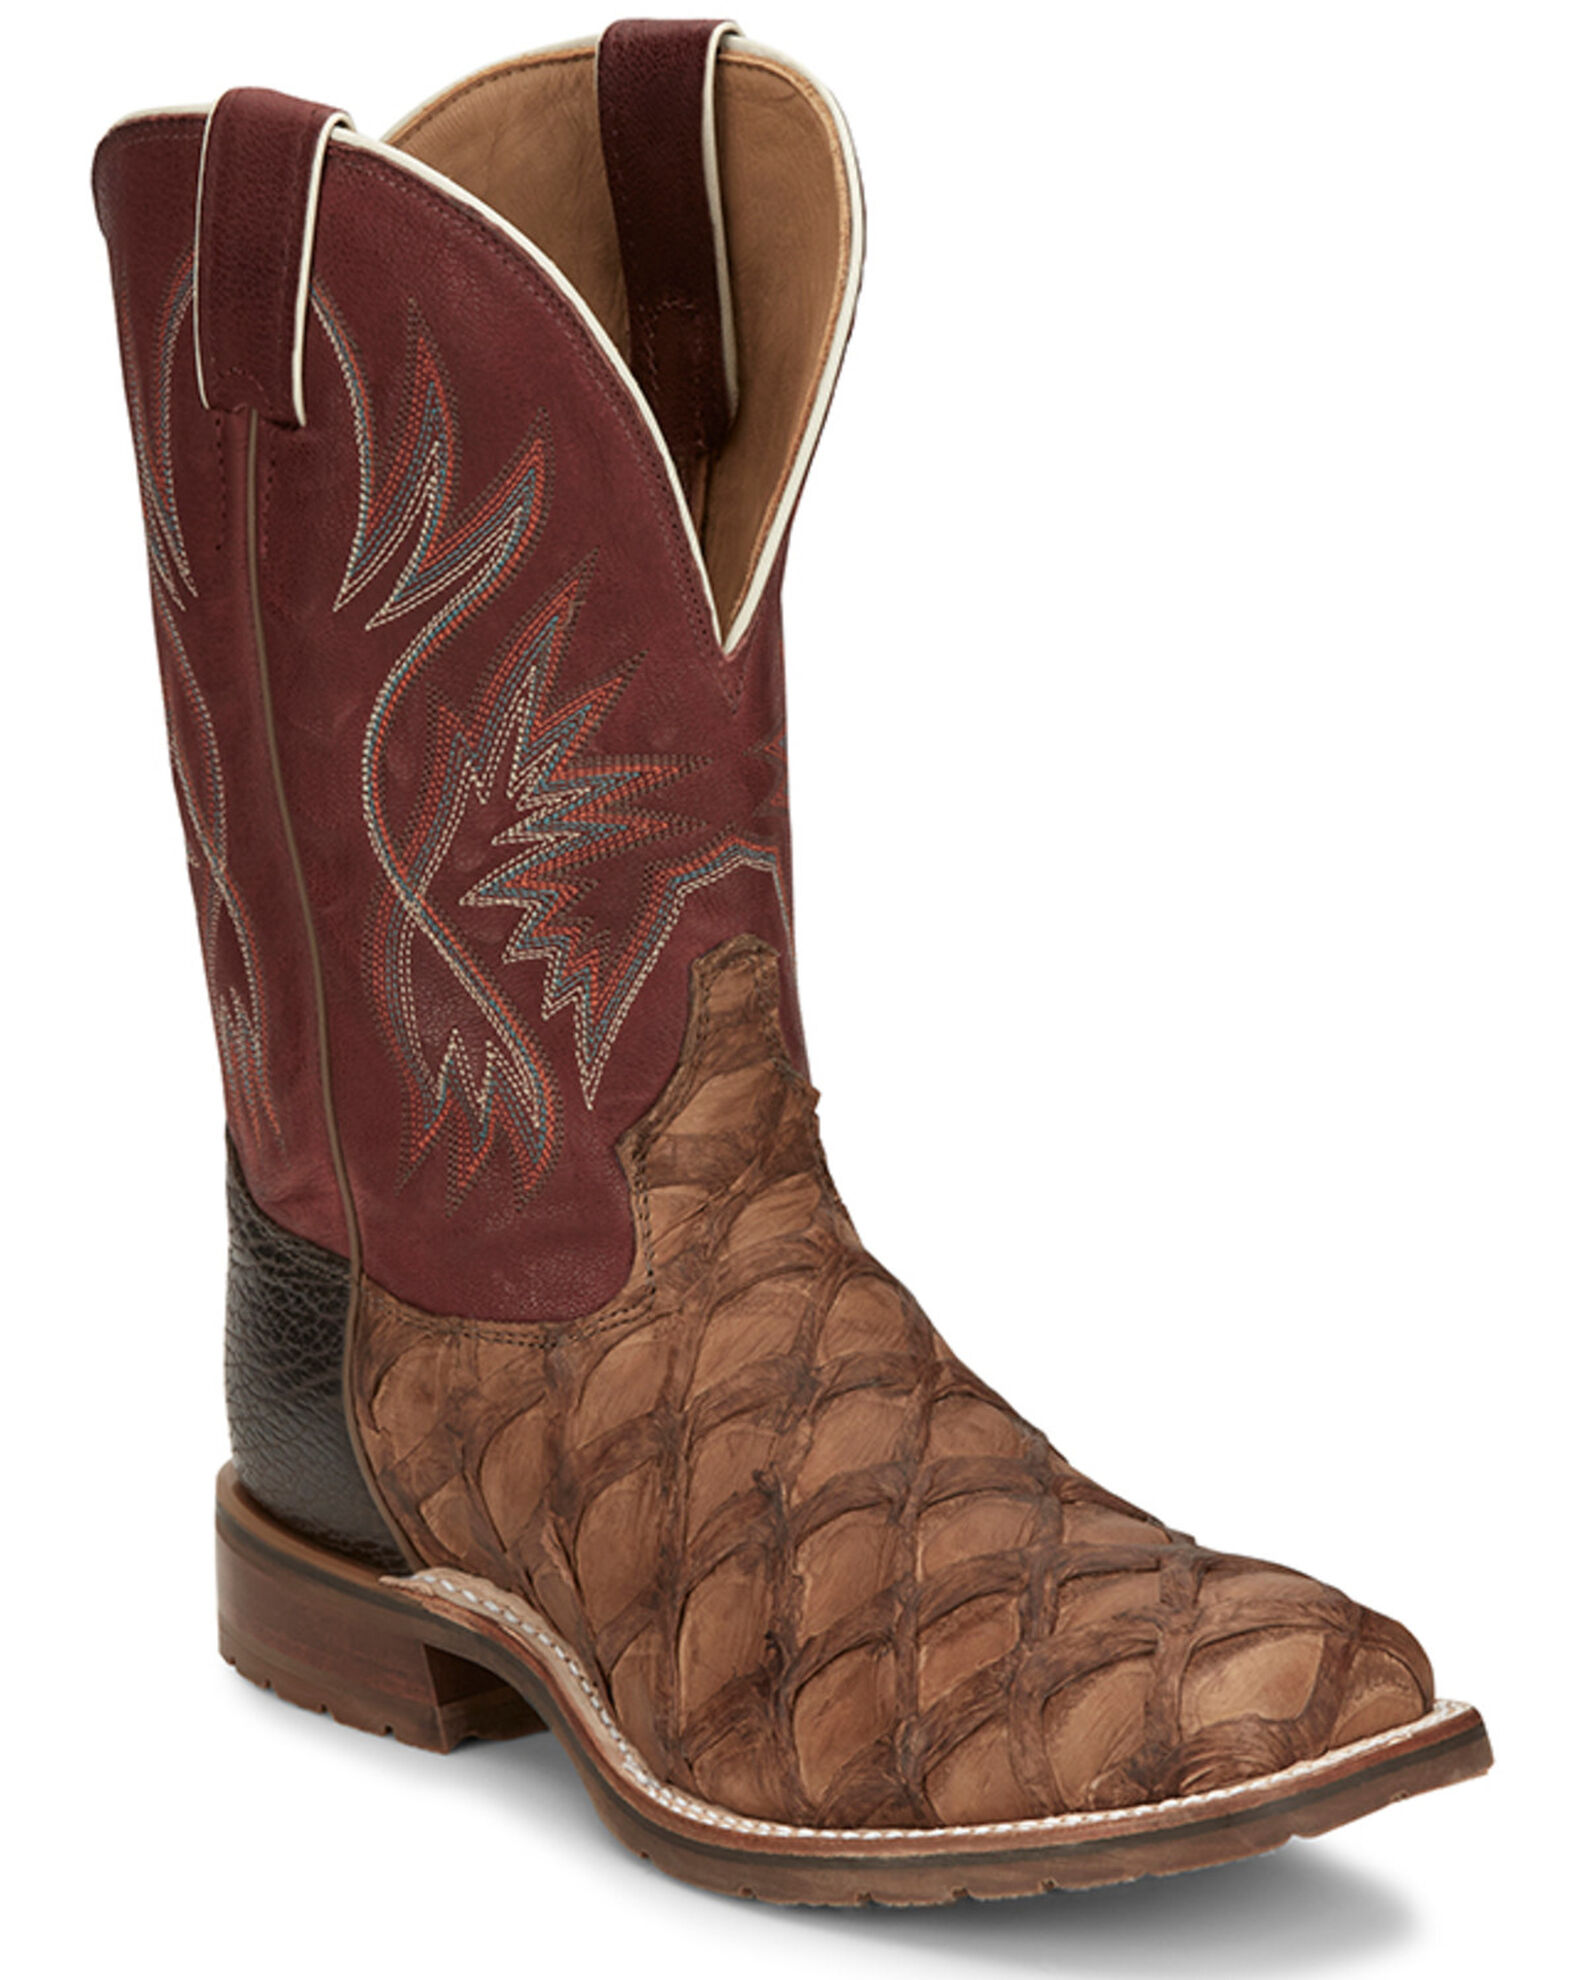 Tony Lama Men's Prescott Exotic Pirarucu Western Boots - Broad Square Toe